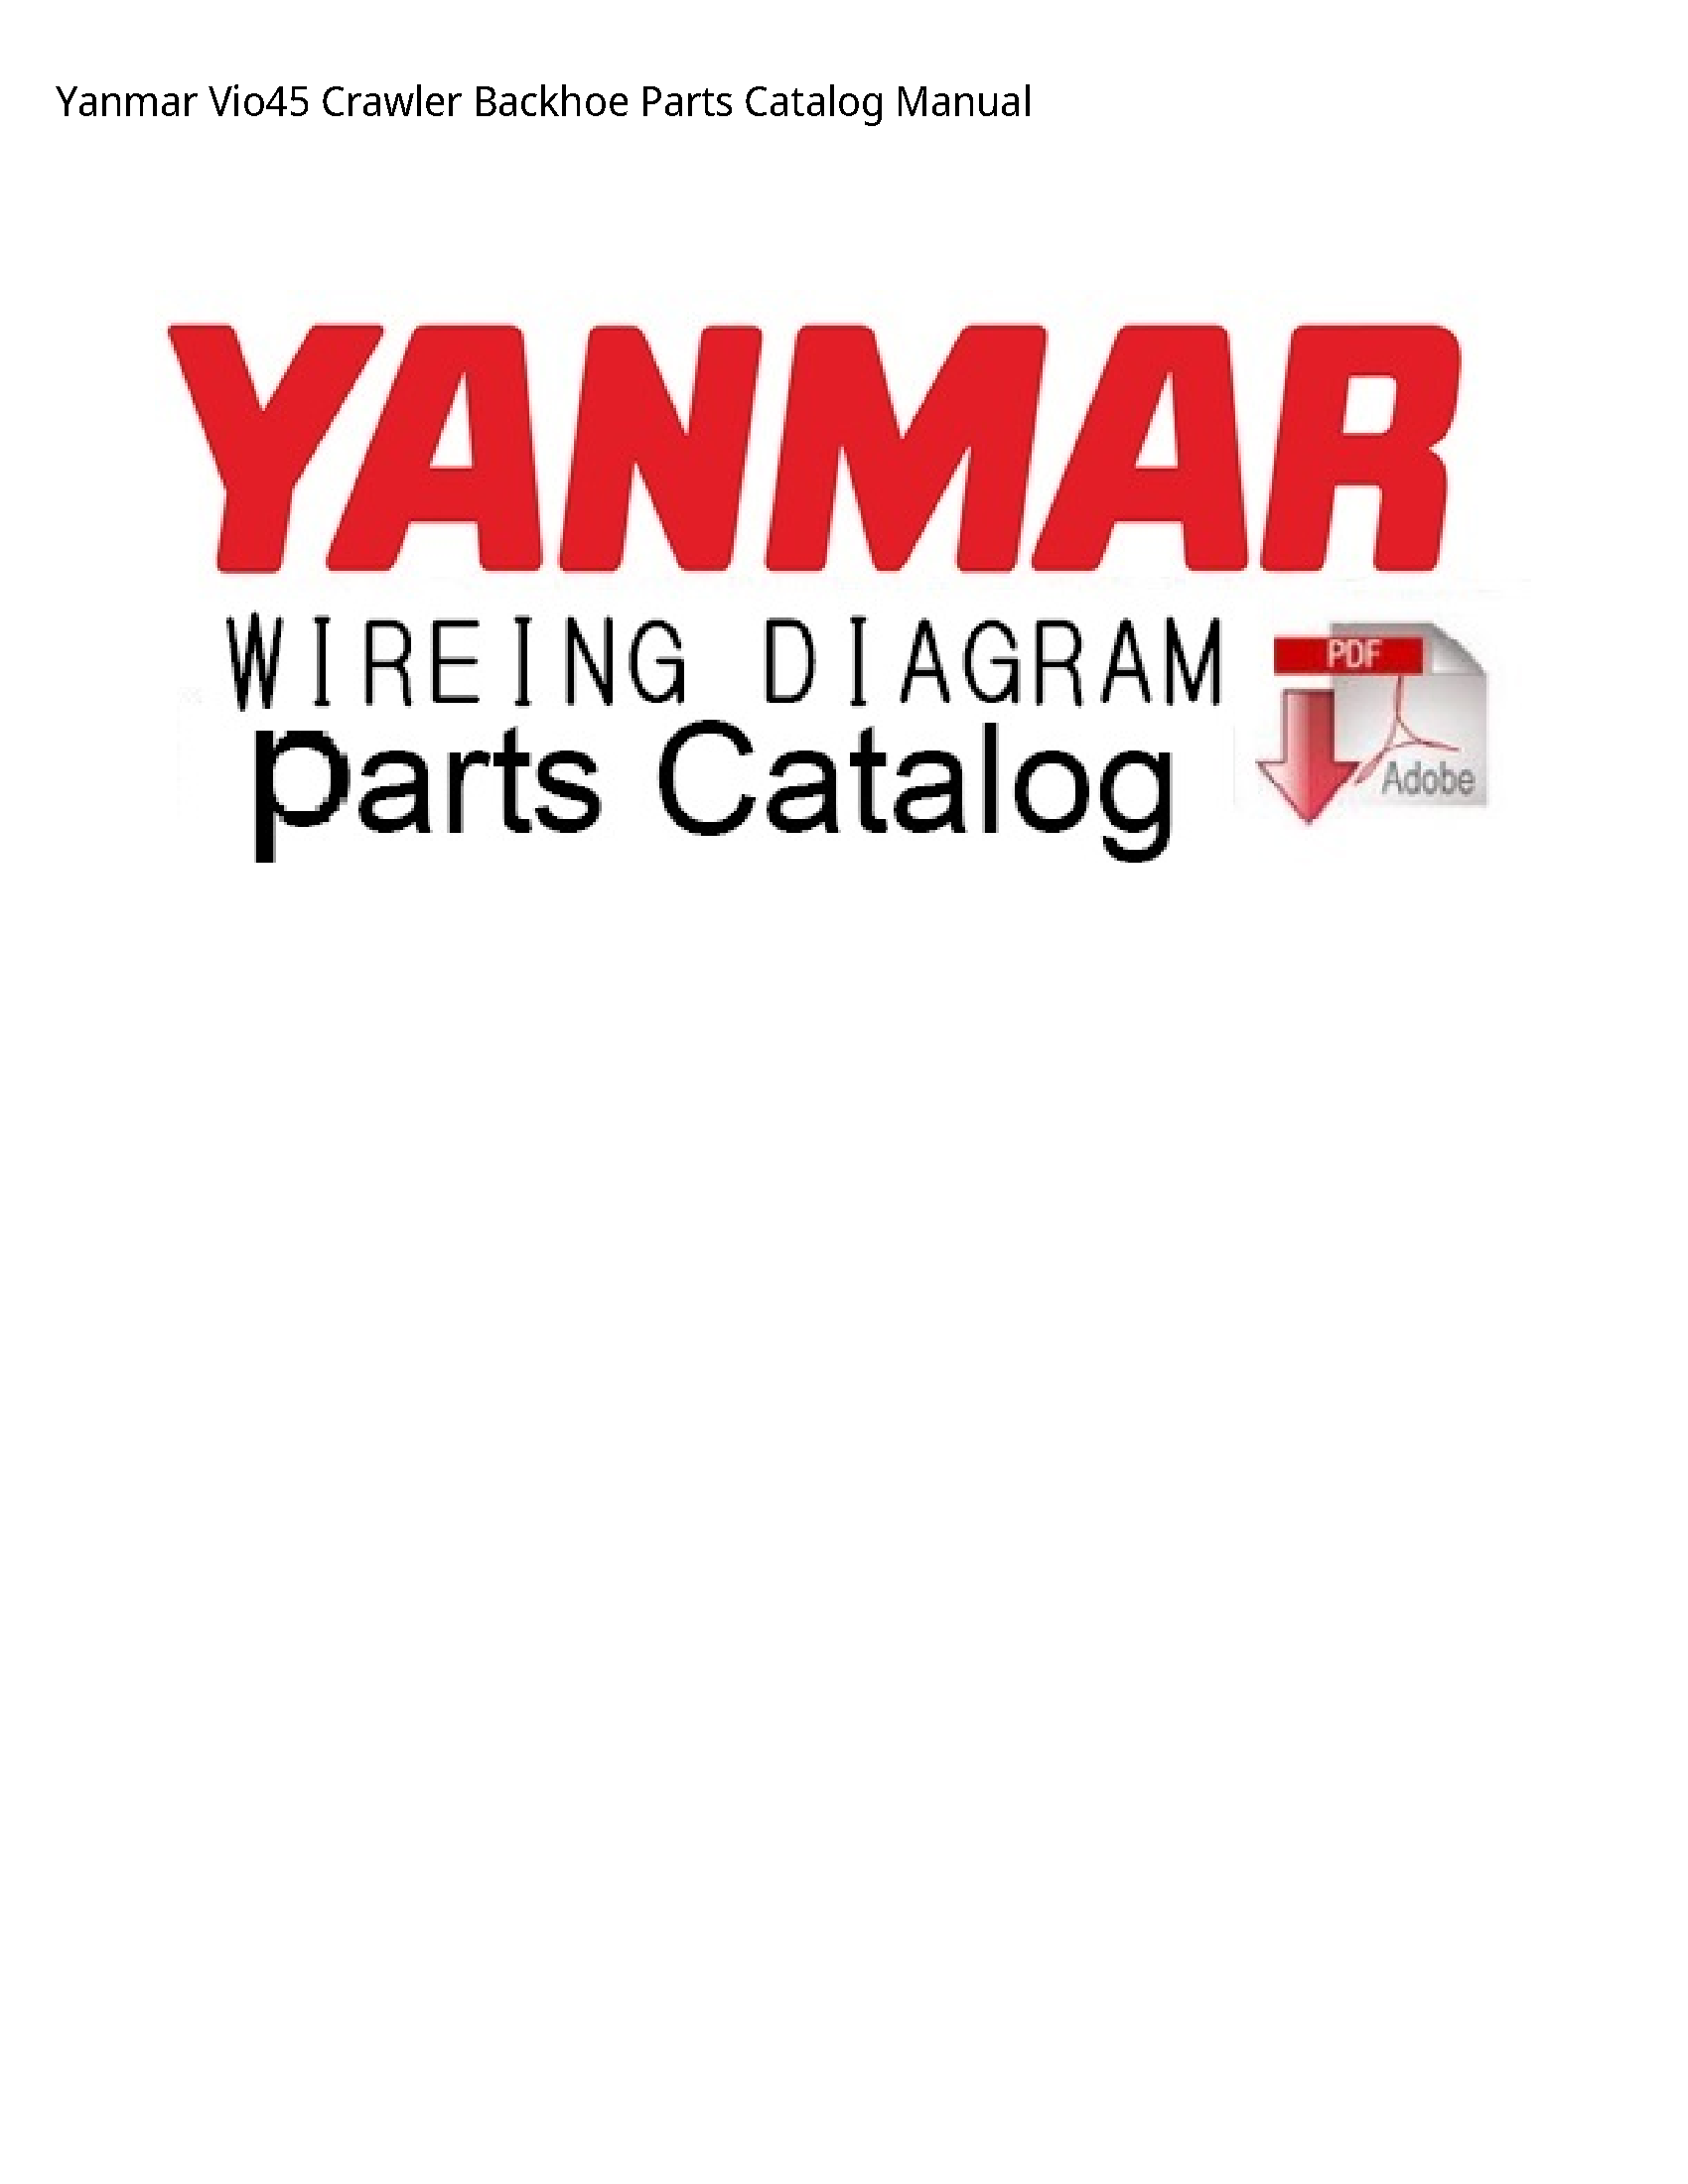 Yanmar Vio45 Crawler Backhoe Parts Catalog manual